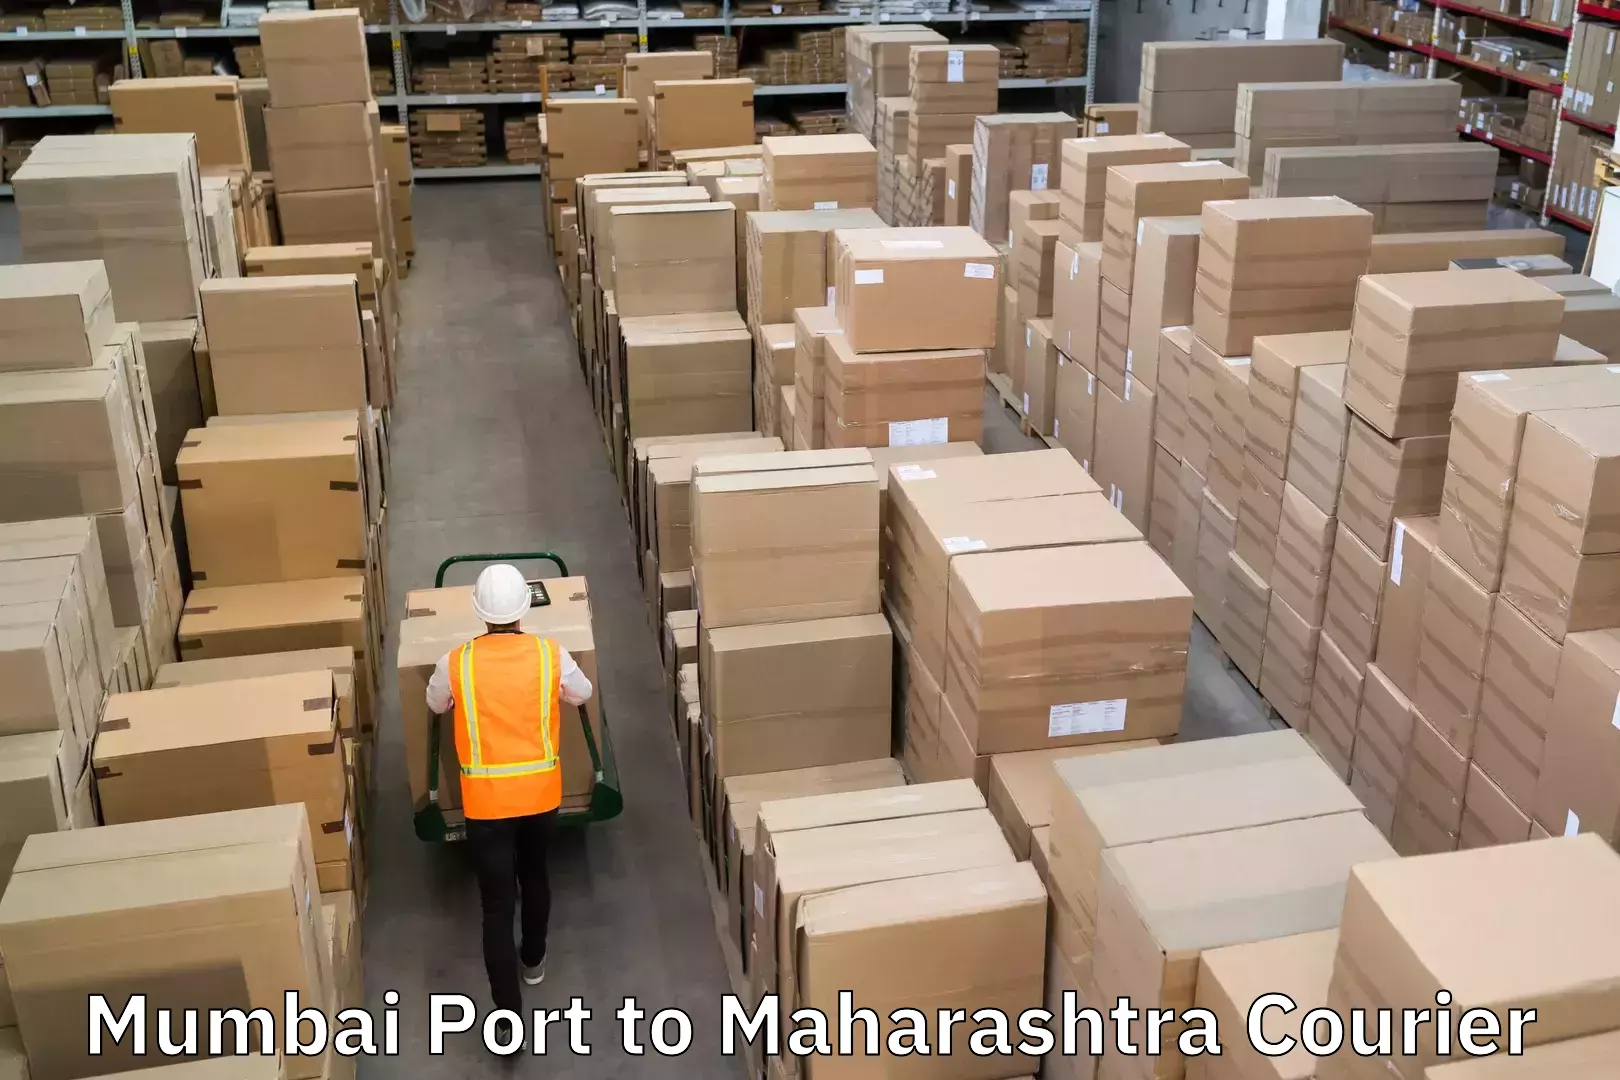 On-call courier service Mumbai Port to Yeola